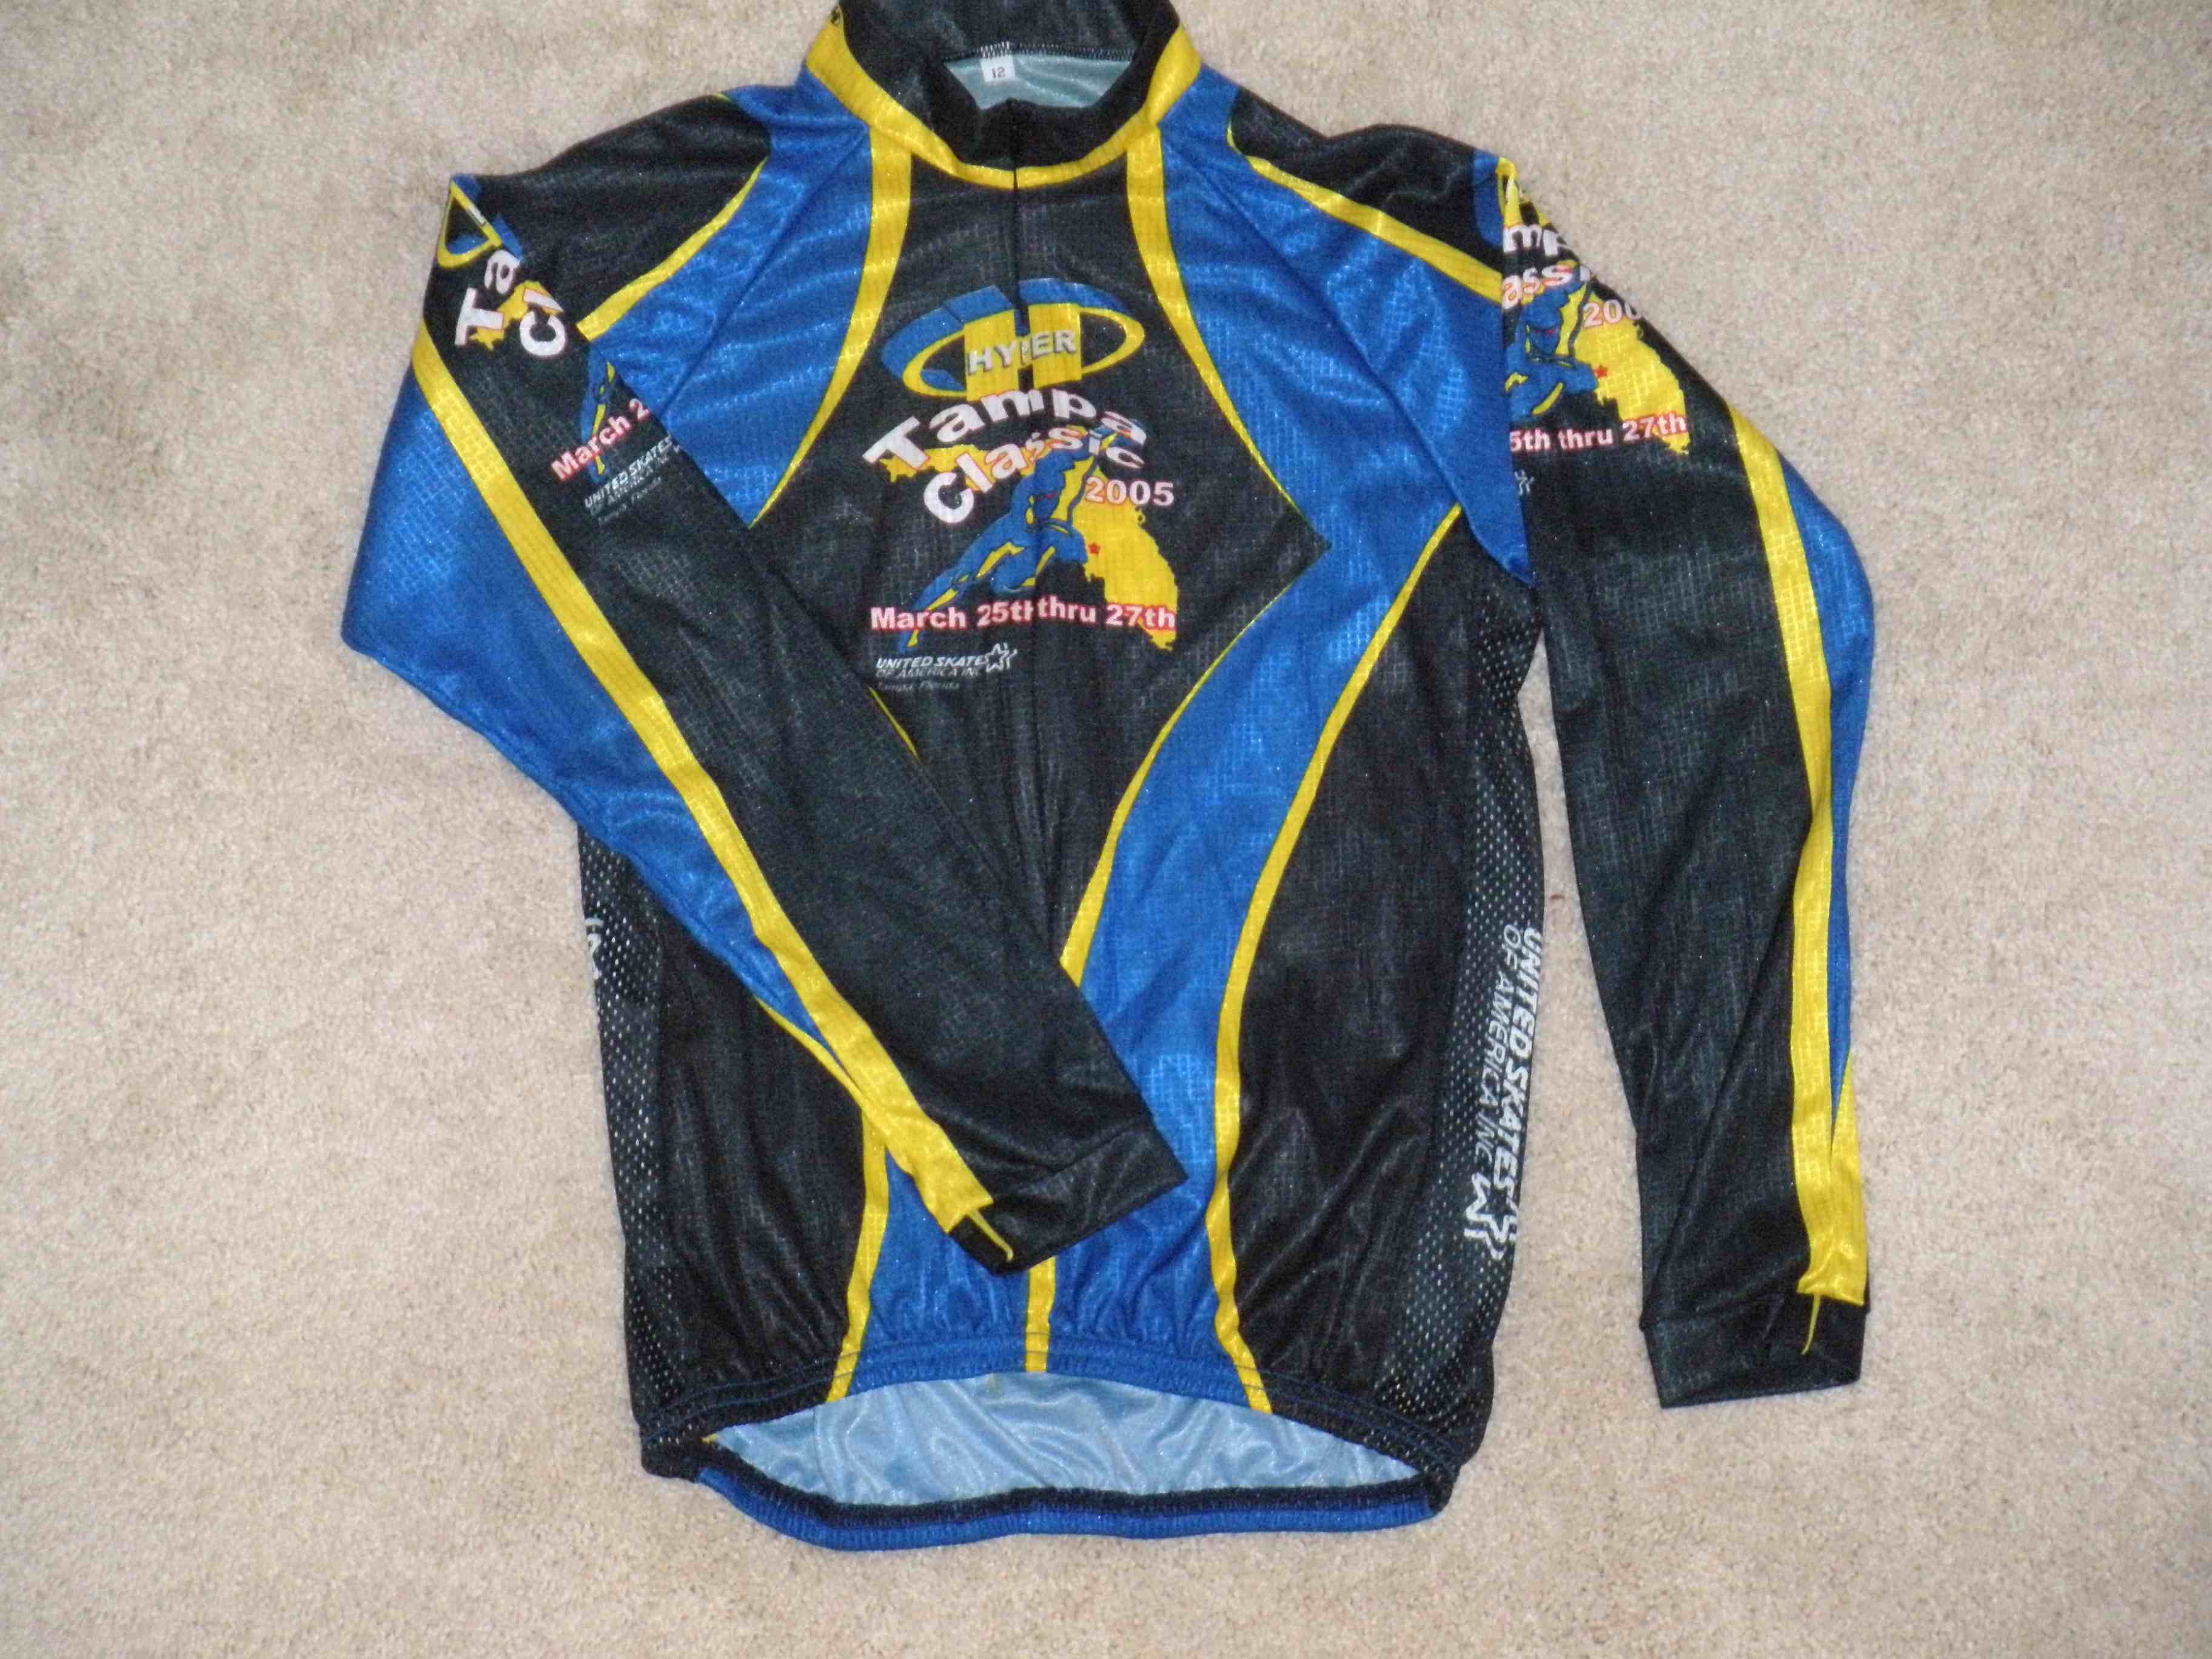 Tampa Classic 2005 Inline Skate Jacket - Youth Medium